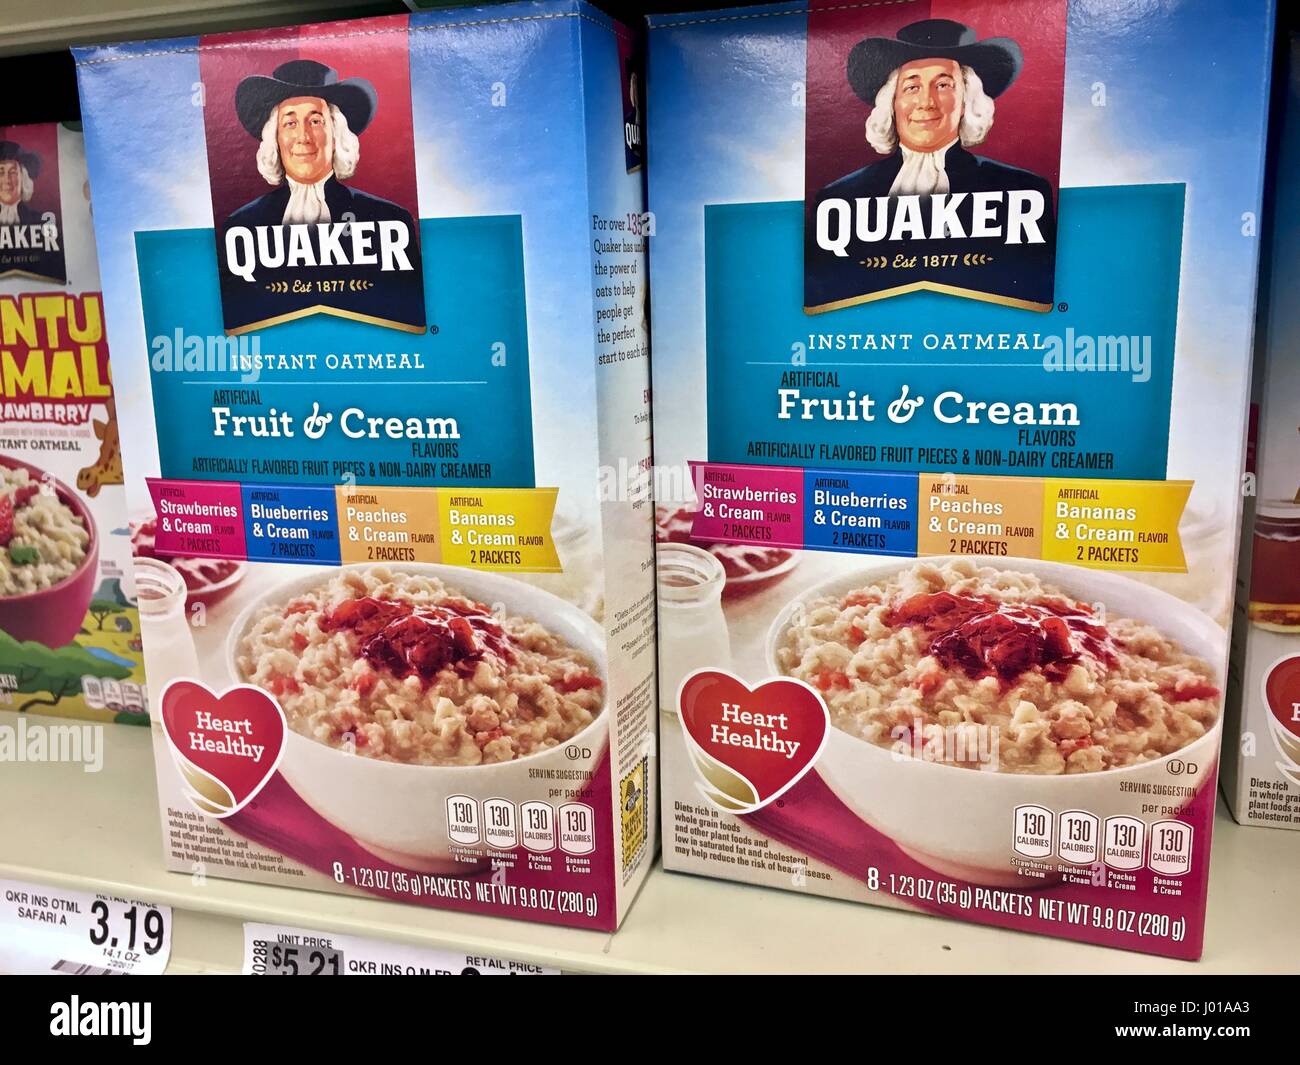 Quaker oatmeal on food market shelf Stock Photo